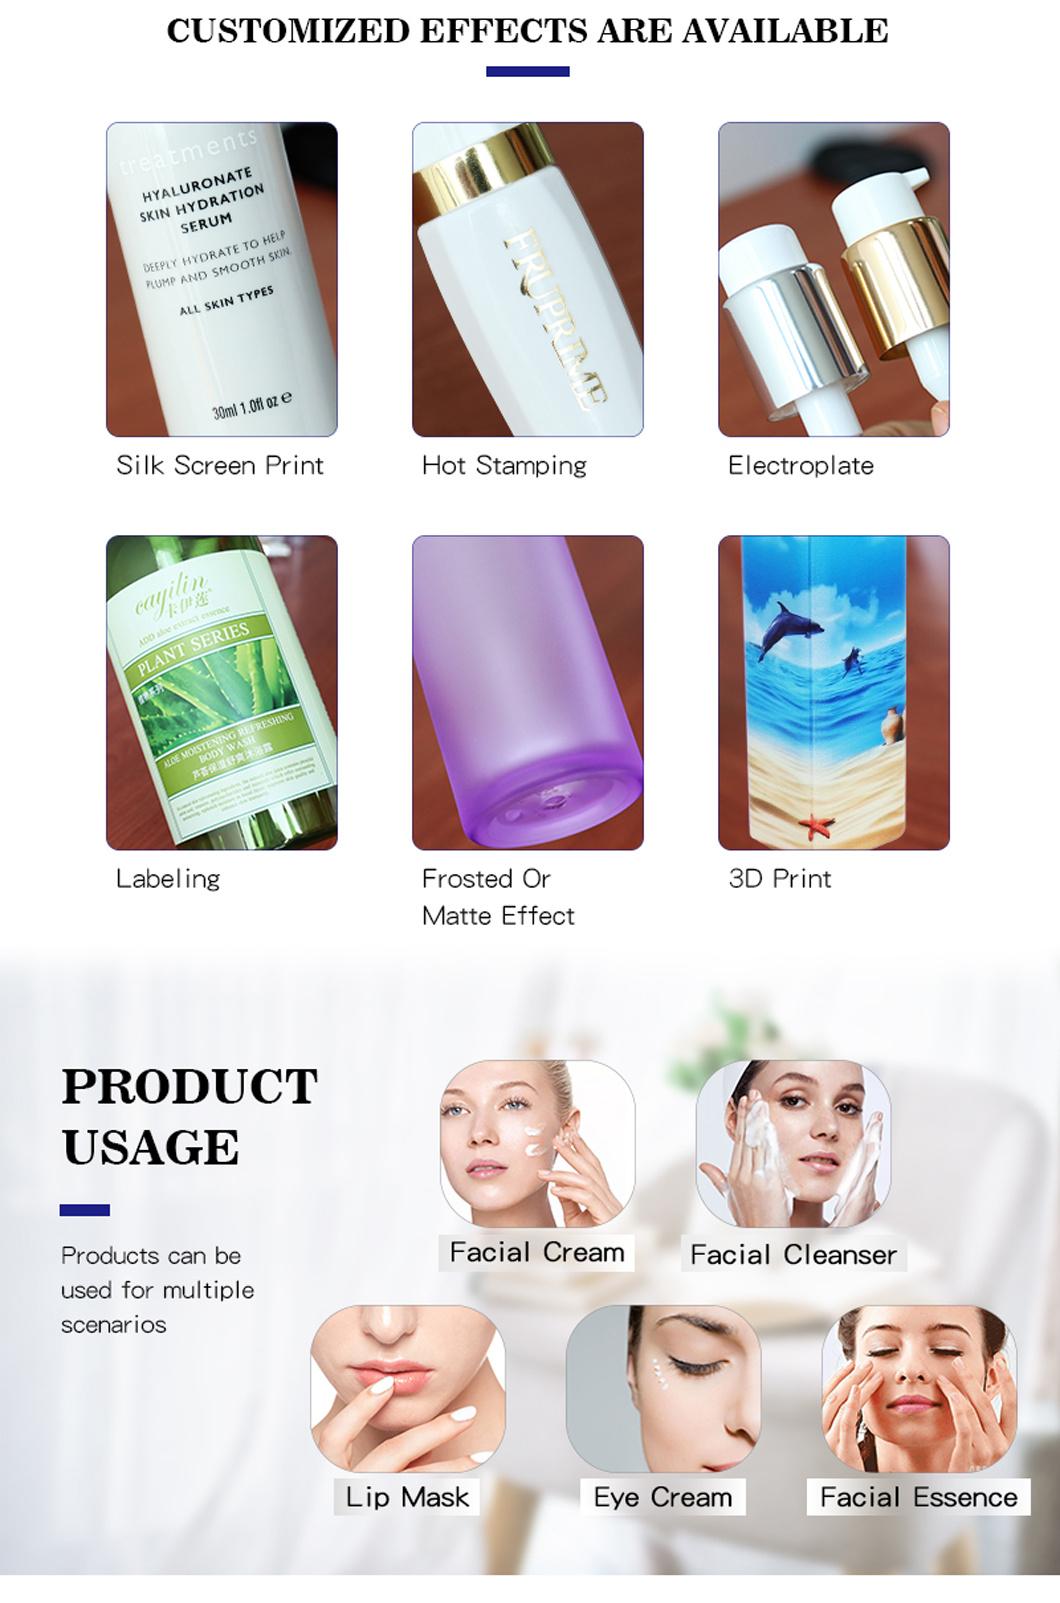 Luxury Empty Cosmetic Skincare Plastic Container Serum Bottles Acrylic Airless Bottle 15ml 30ml 50ml